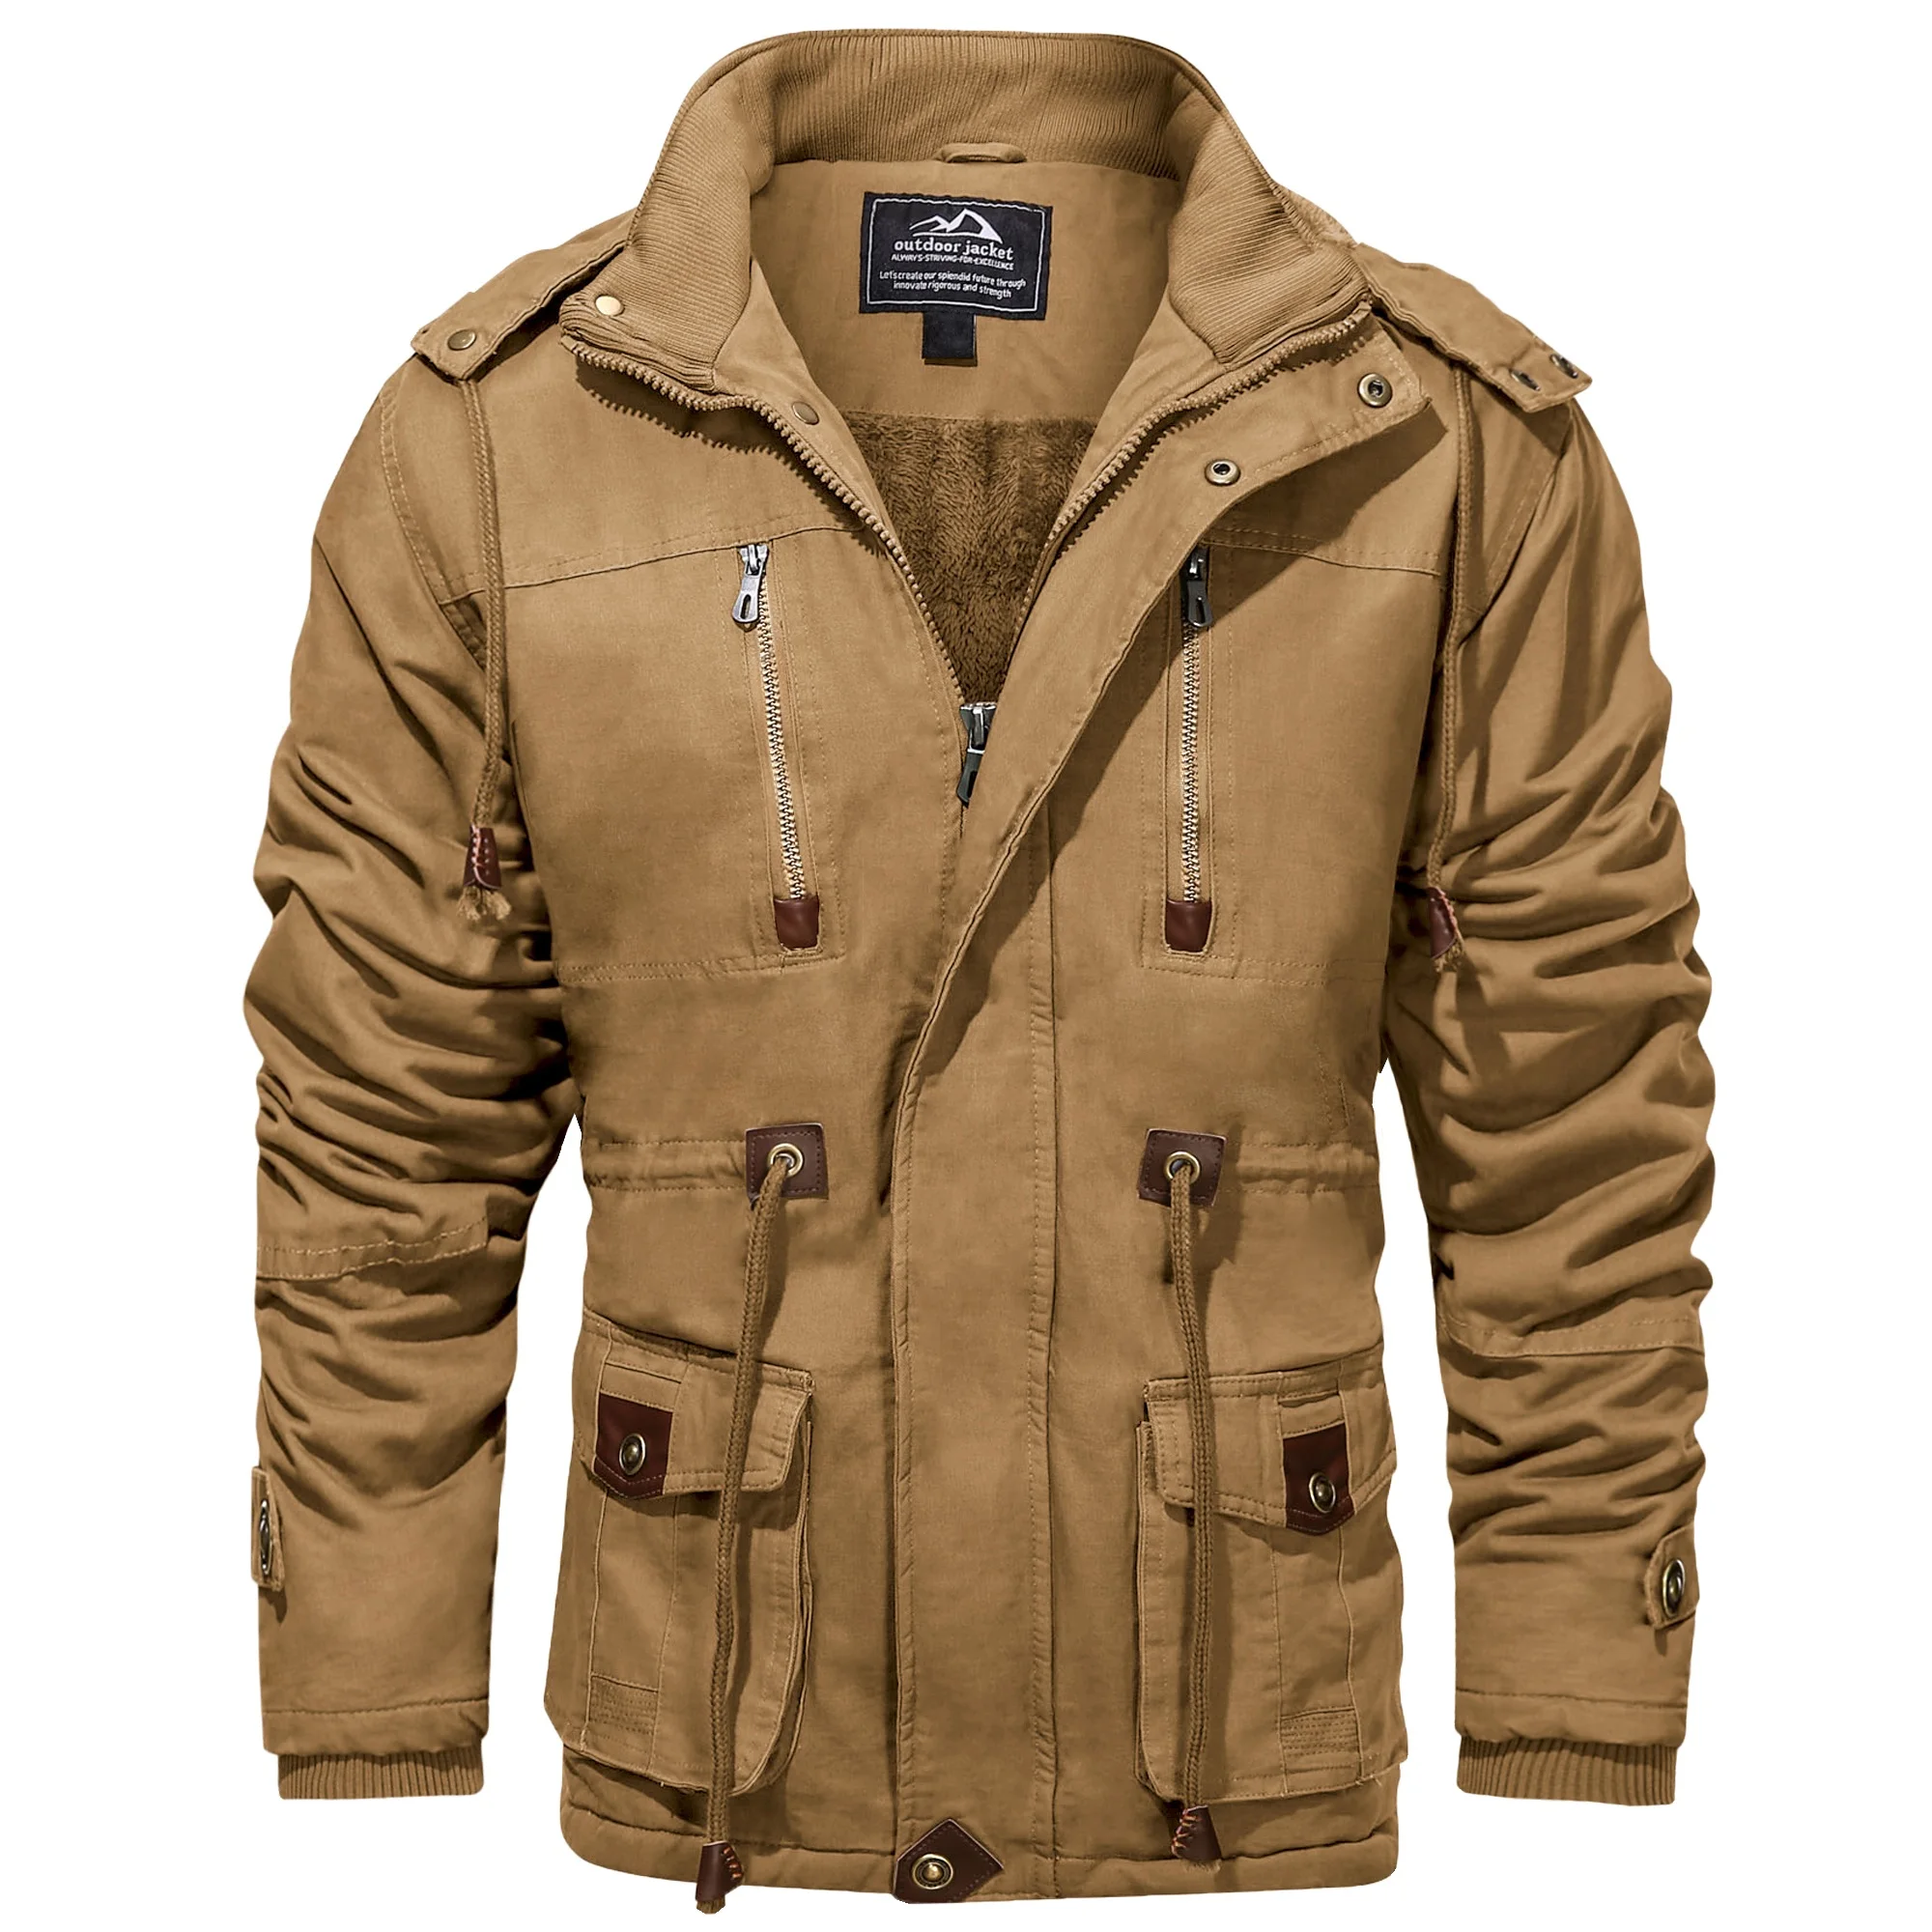 TACVASEN Men's Jacket-Casual Winter Cotton Military Jacket Thicken Hooded Cargo Coat 